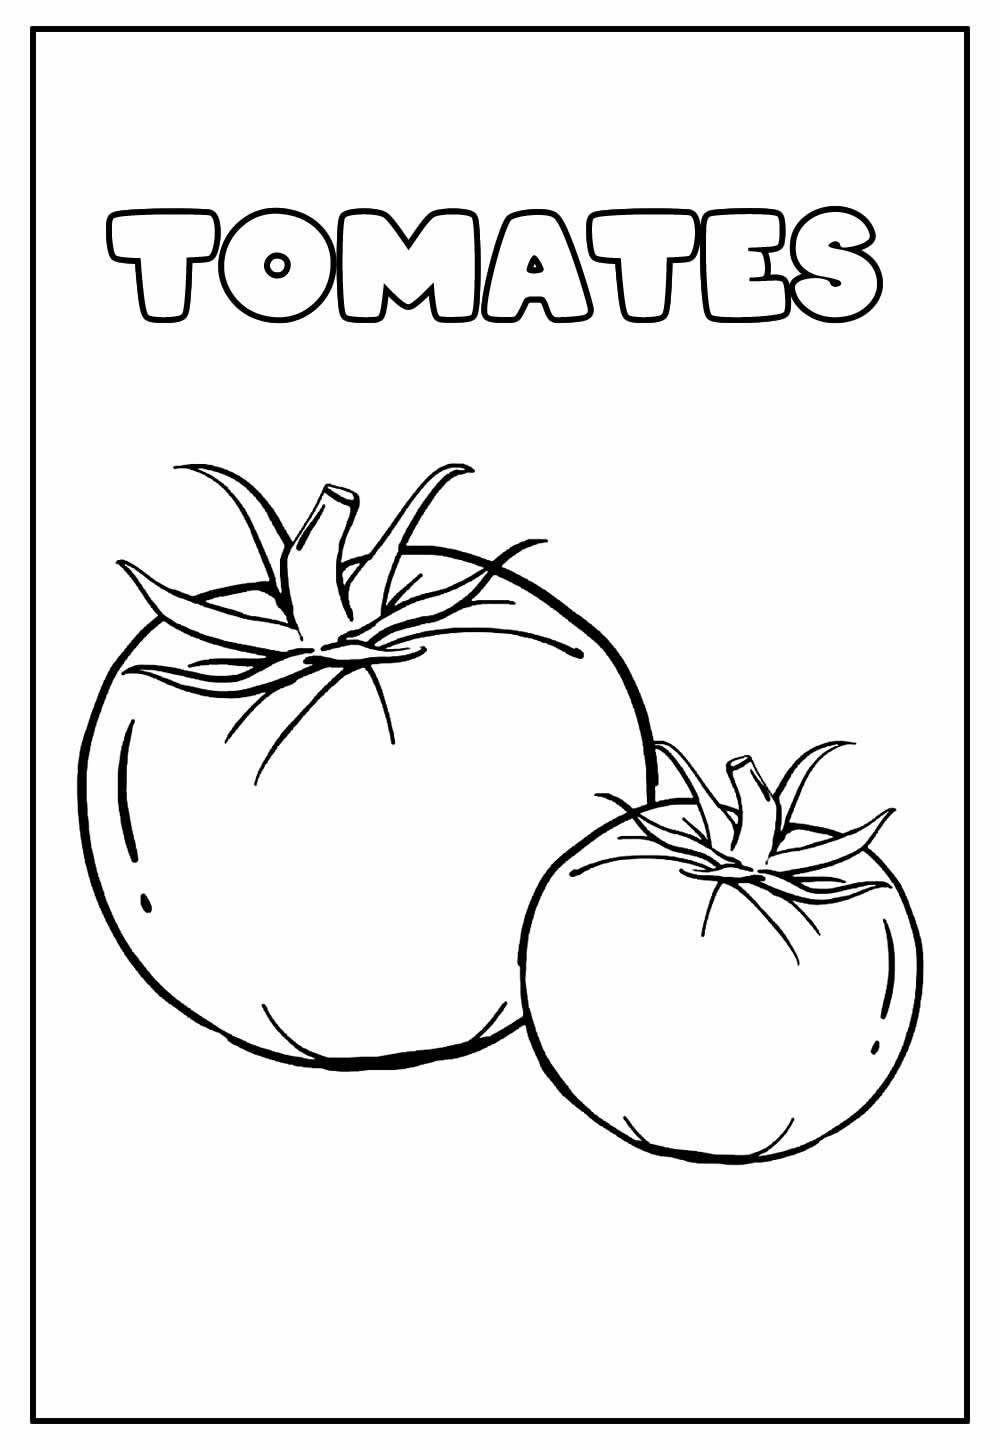 Desenho Educativo de Tomates para colorir